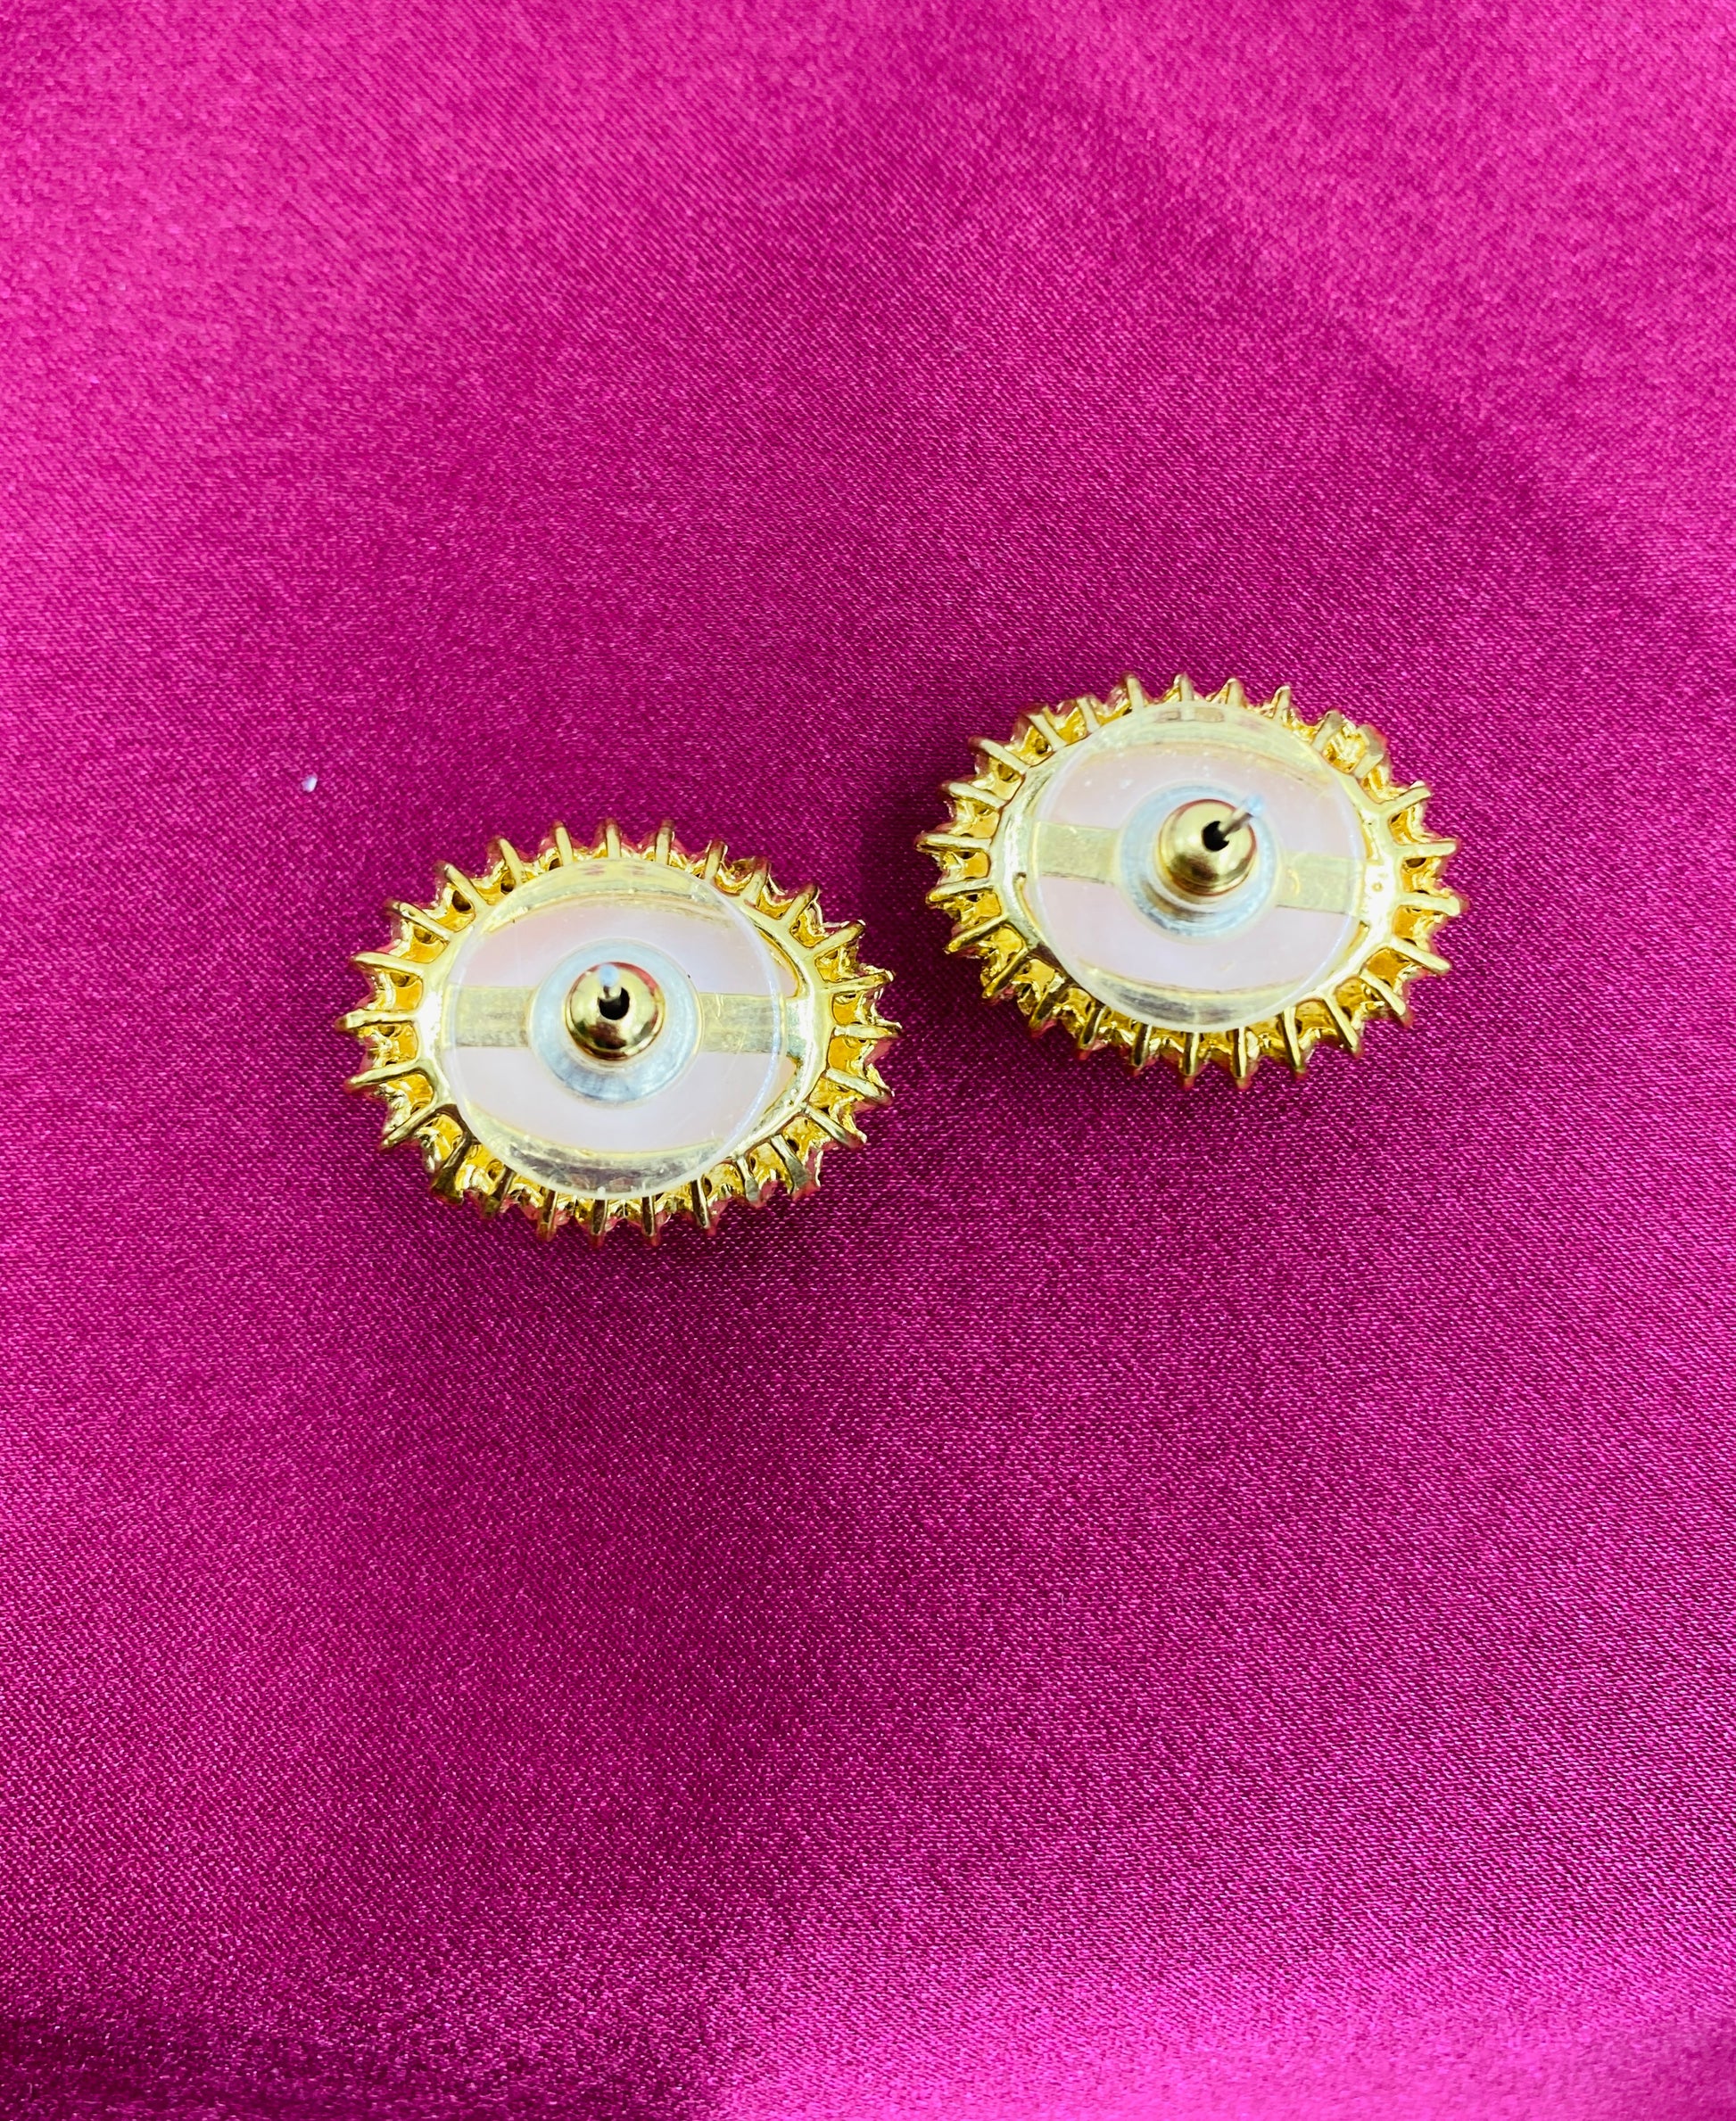 Vintage 1980s Pierced Pink Oval Cameo Rhinestone Earrings